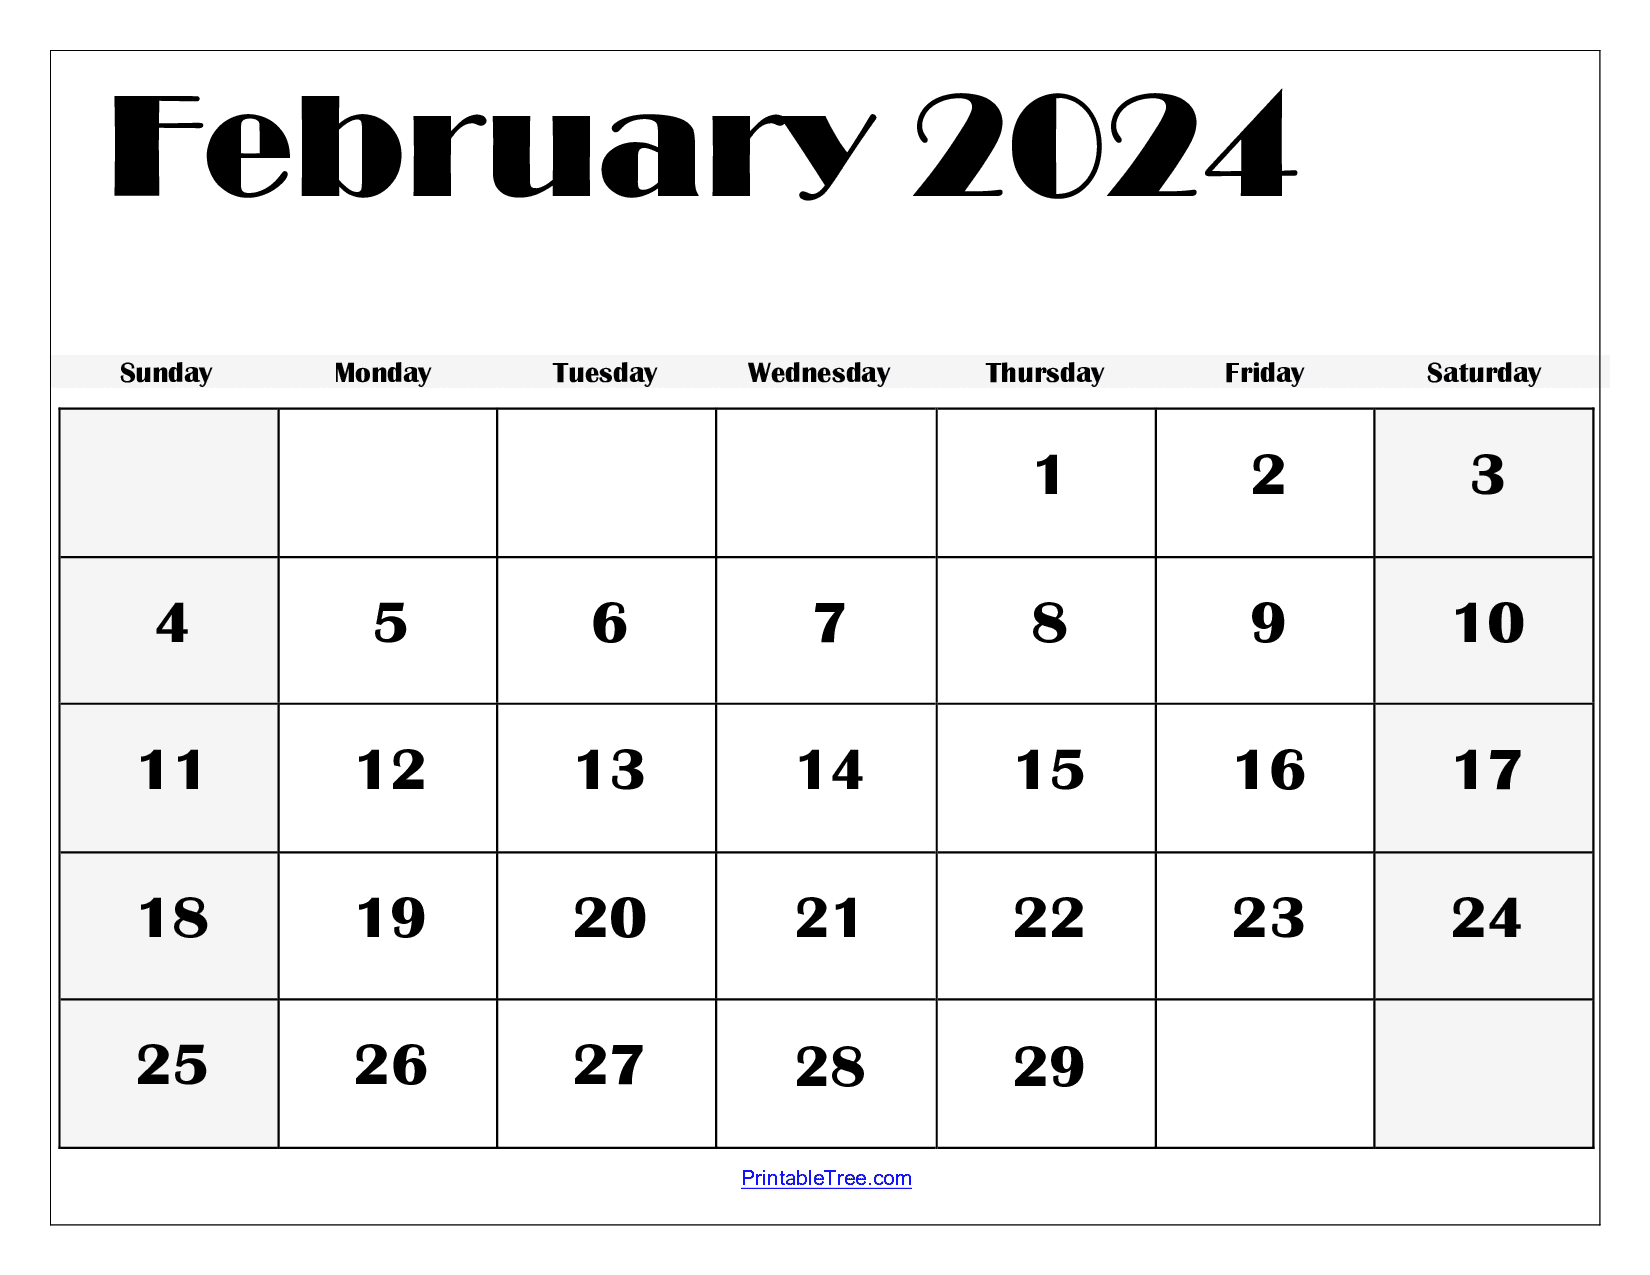 February 2024 Calendar Printable Pdf Template With Holidays for Printable February 2024 Calendar With Holidays